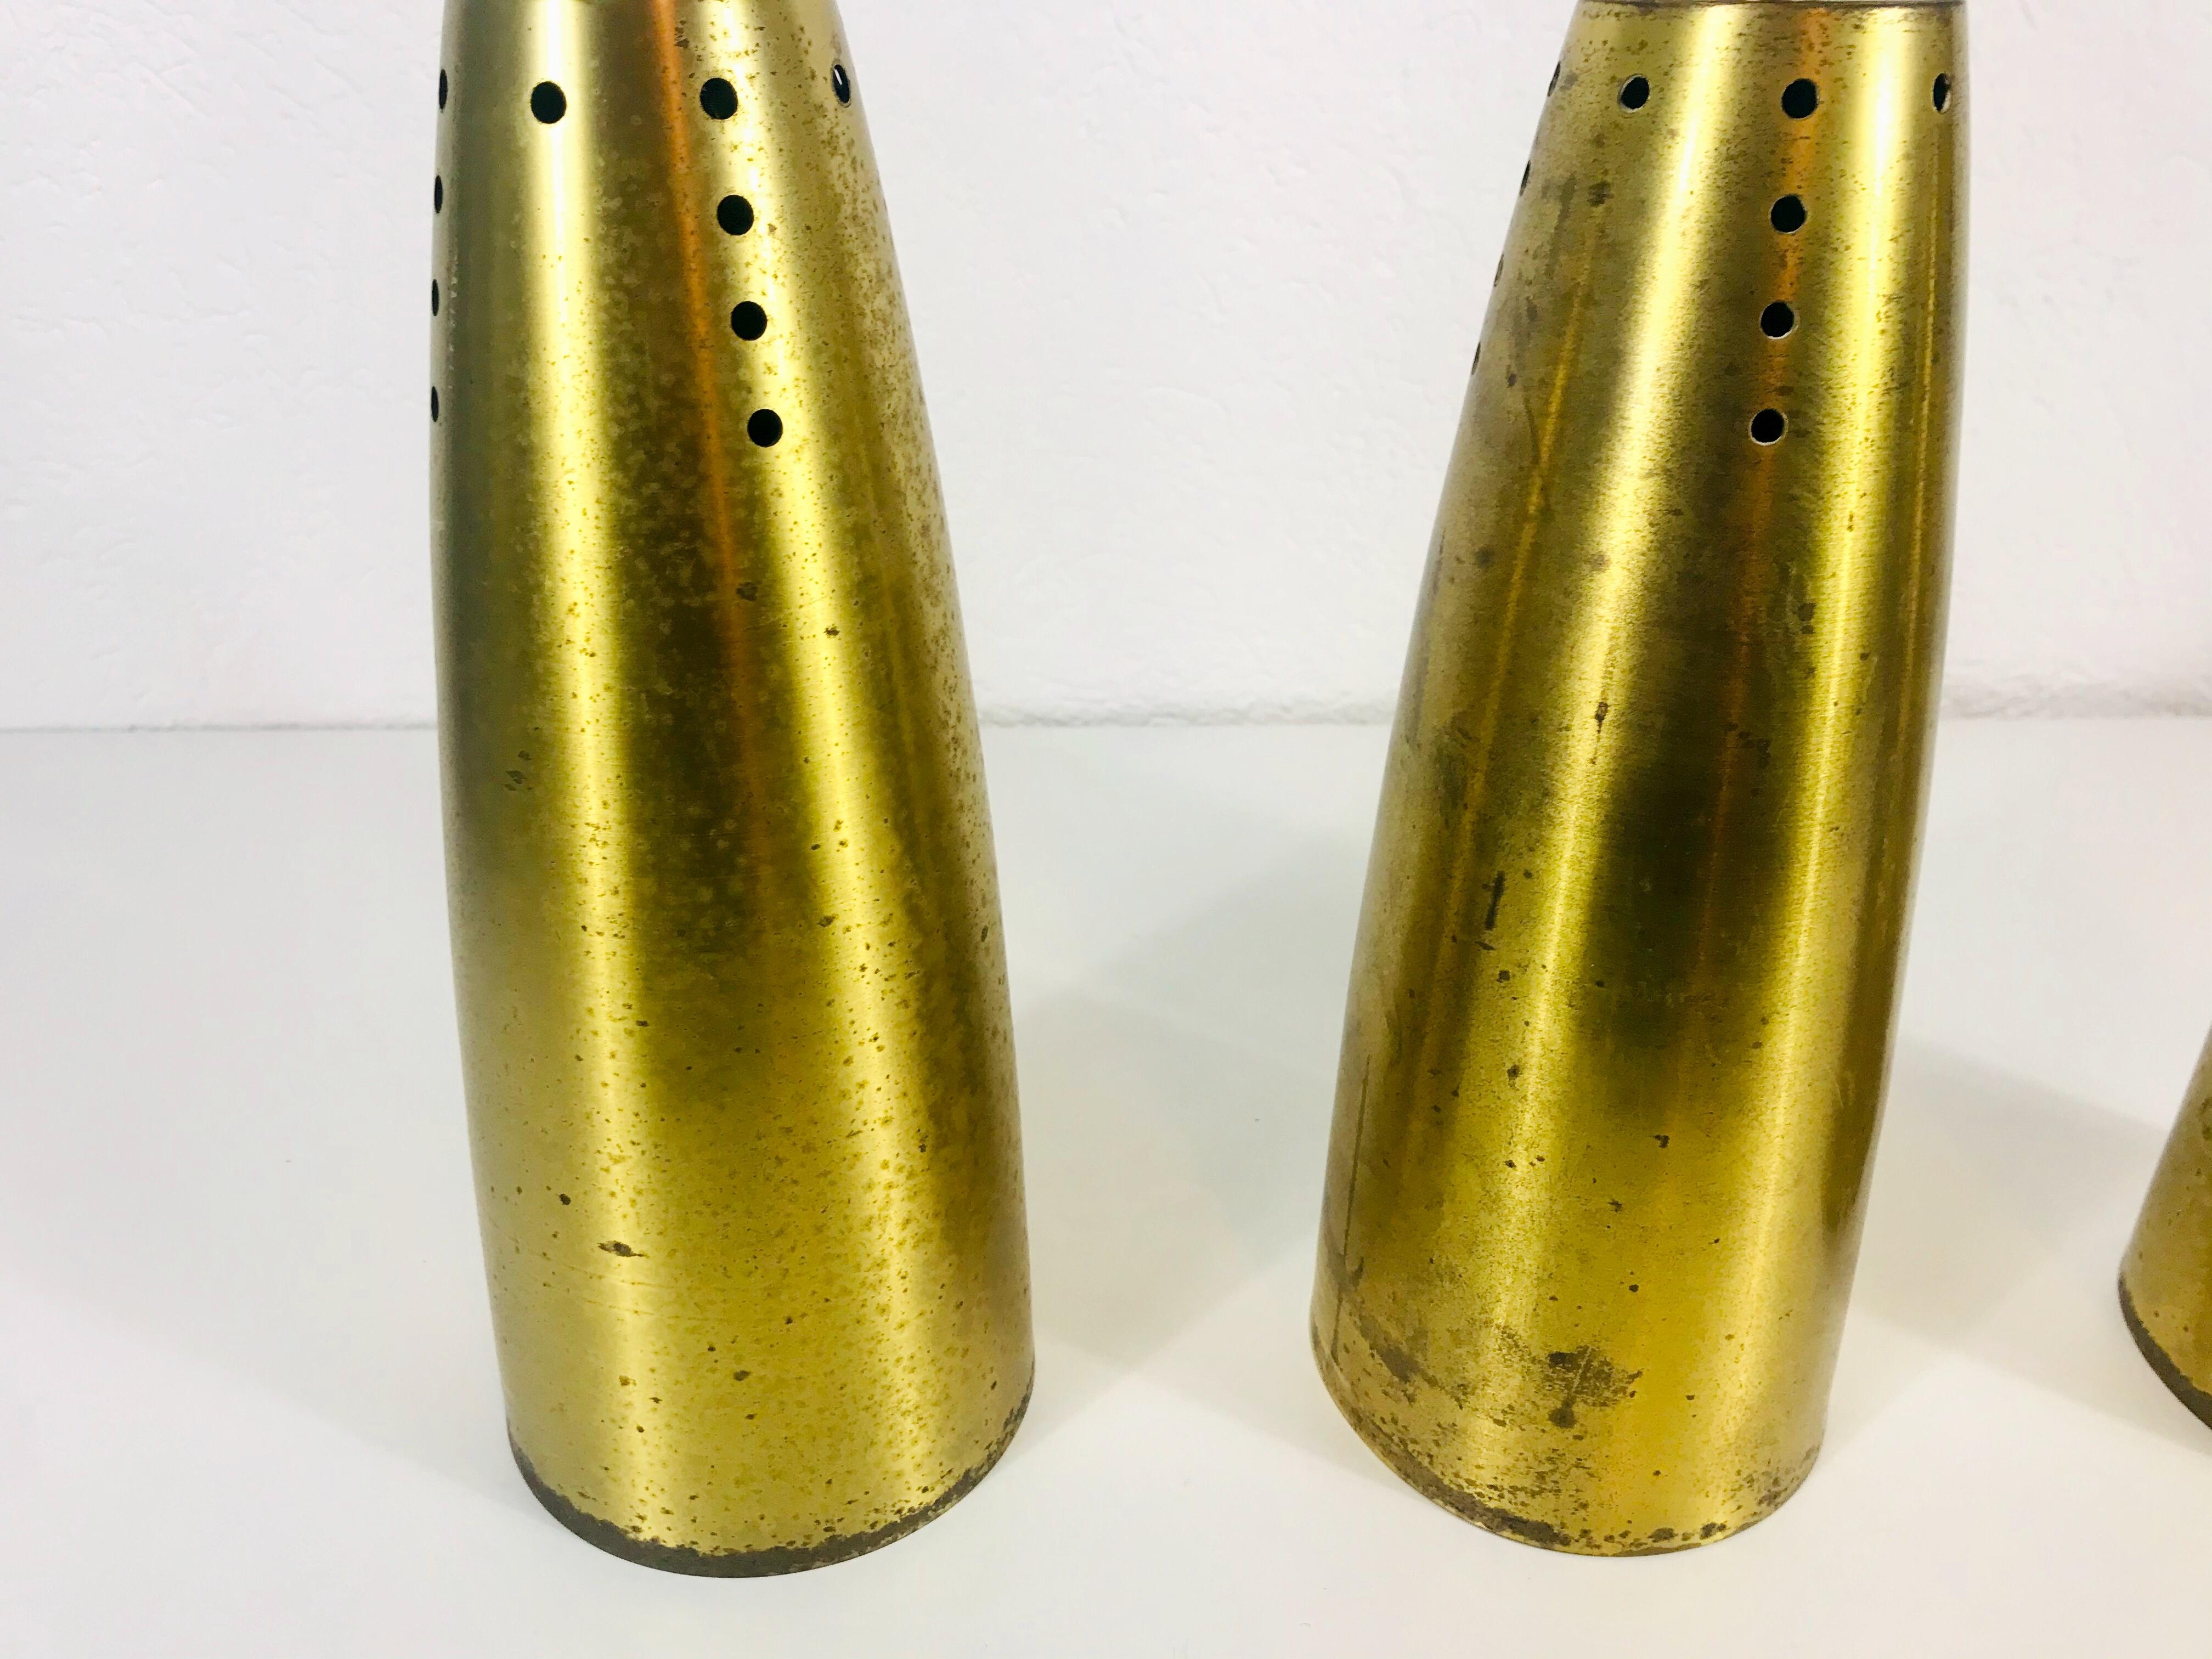 Set of 3 Full Brass Mid-Century Modern Pendant Lamps, 1950s, Germany For Sale 8